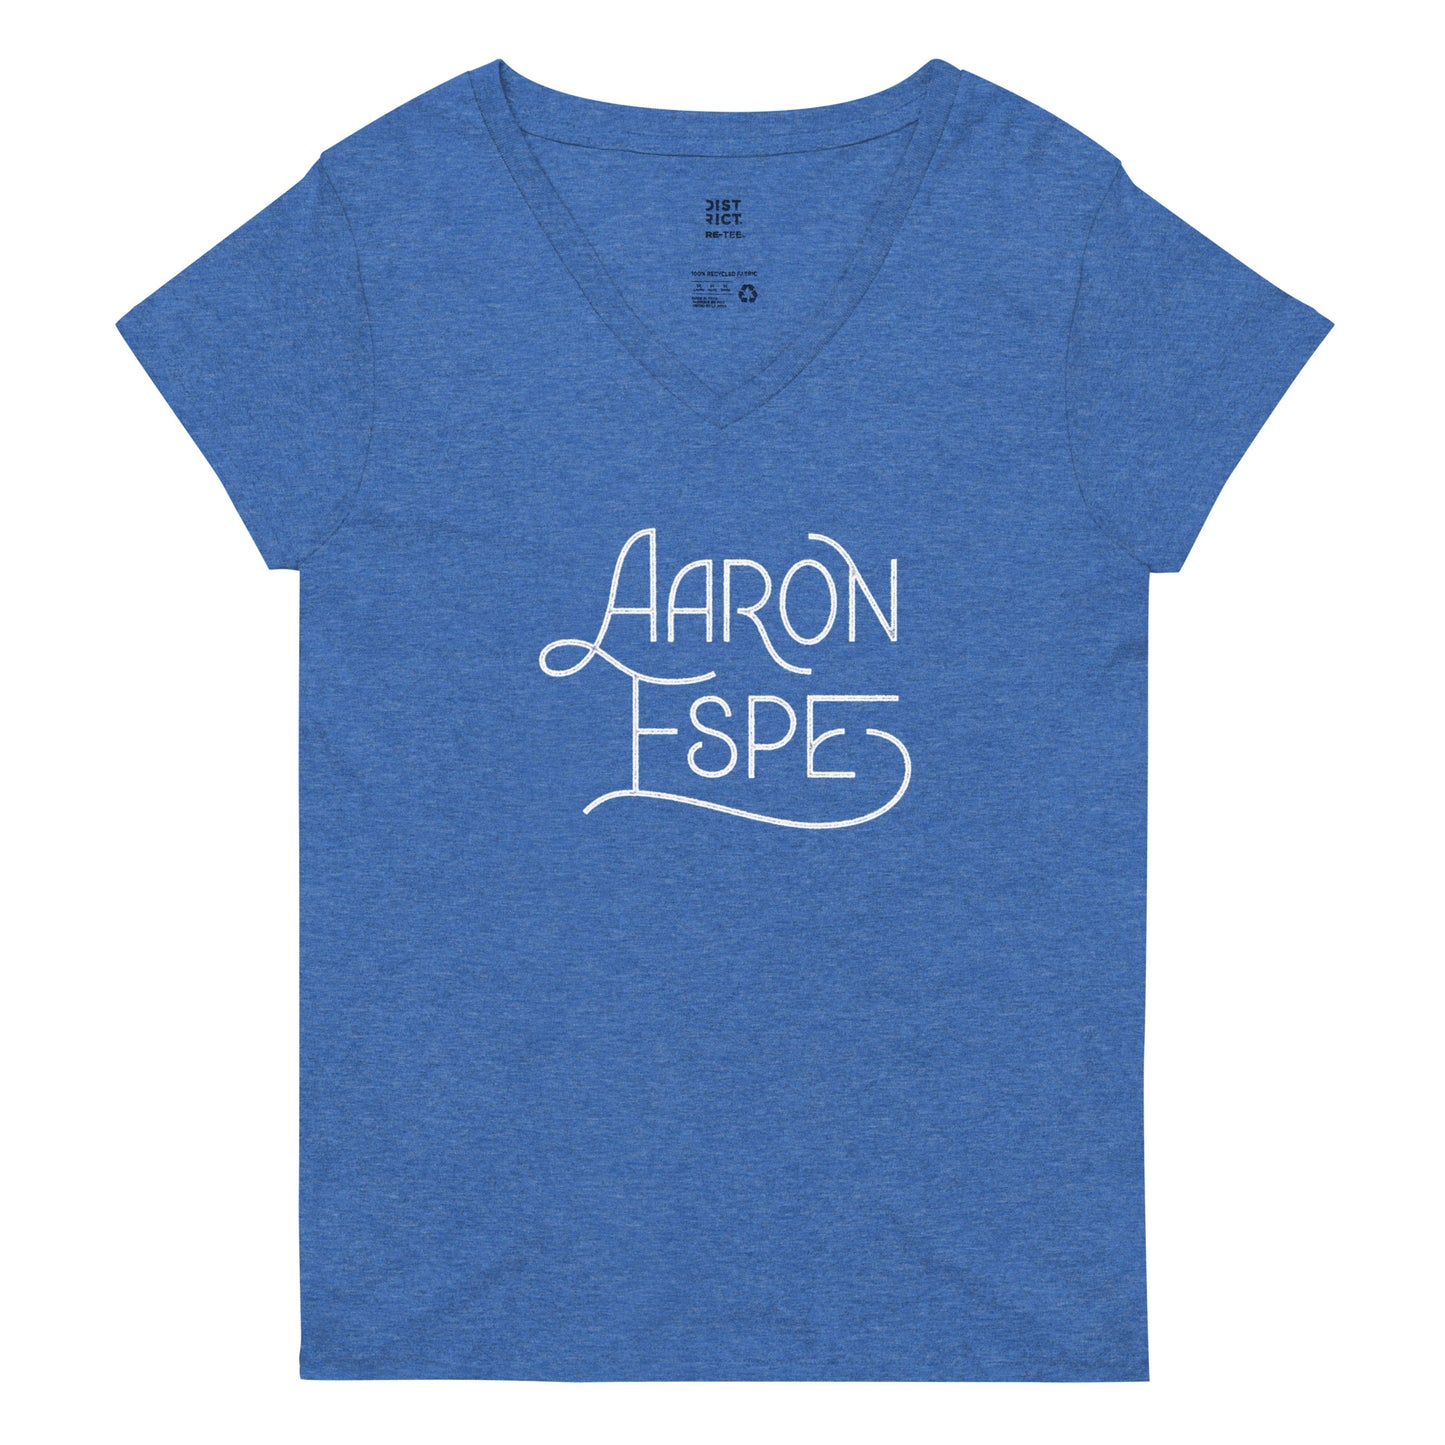 Women’s V-Neck T-Shirt Aaron Espe Logo